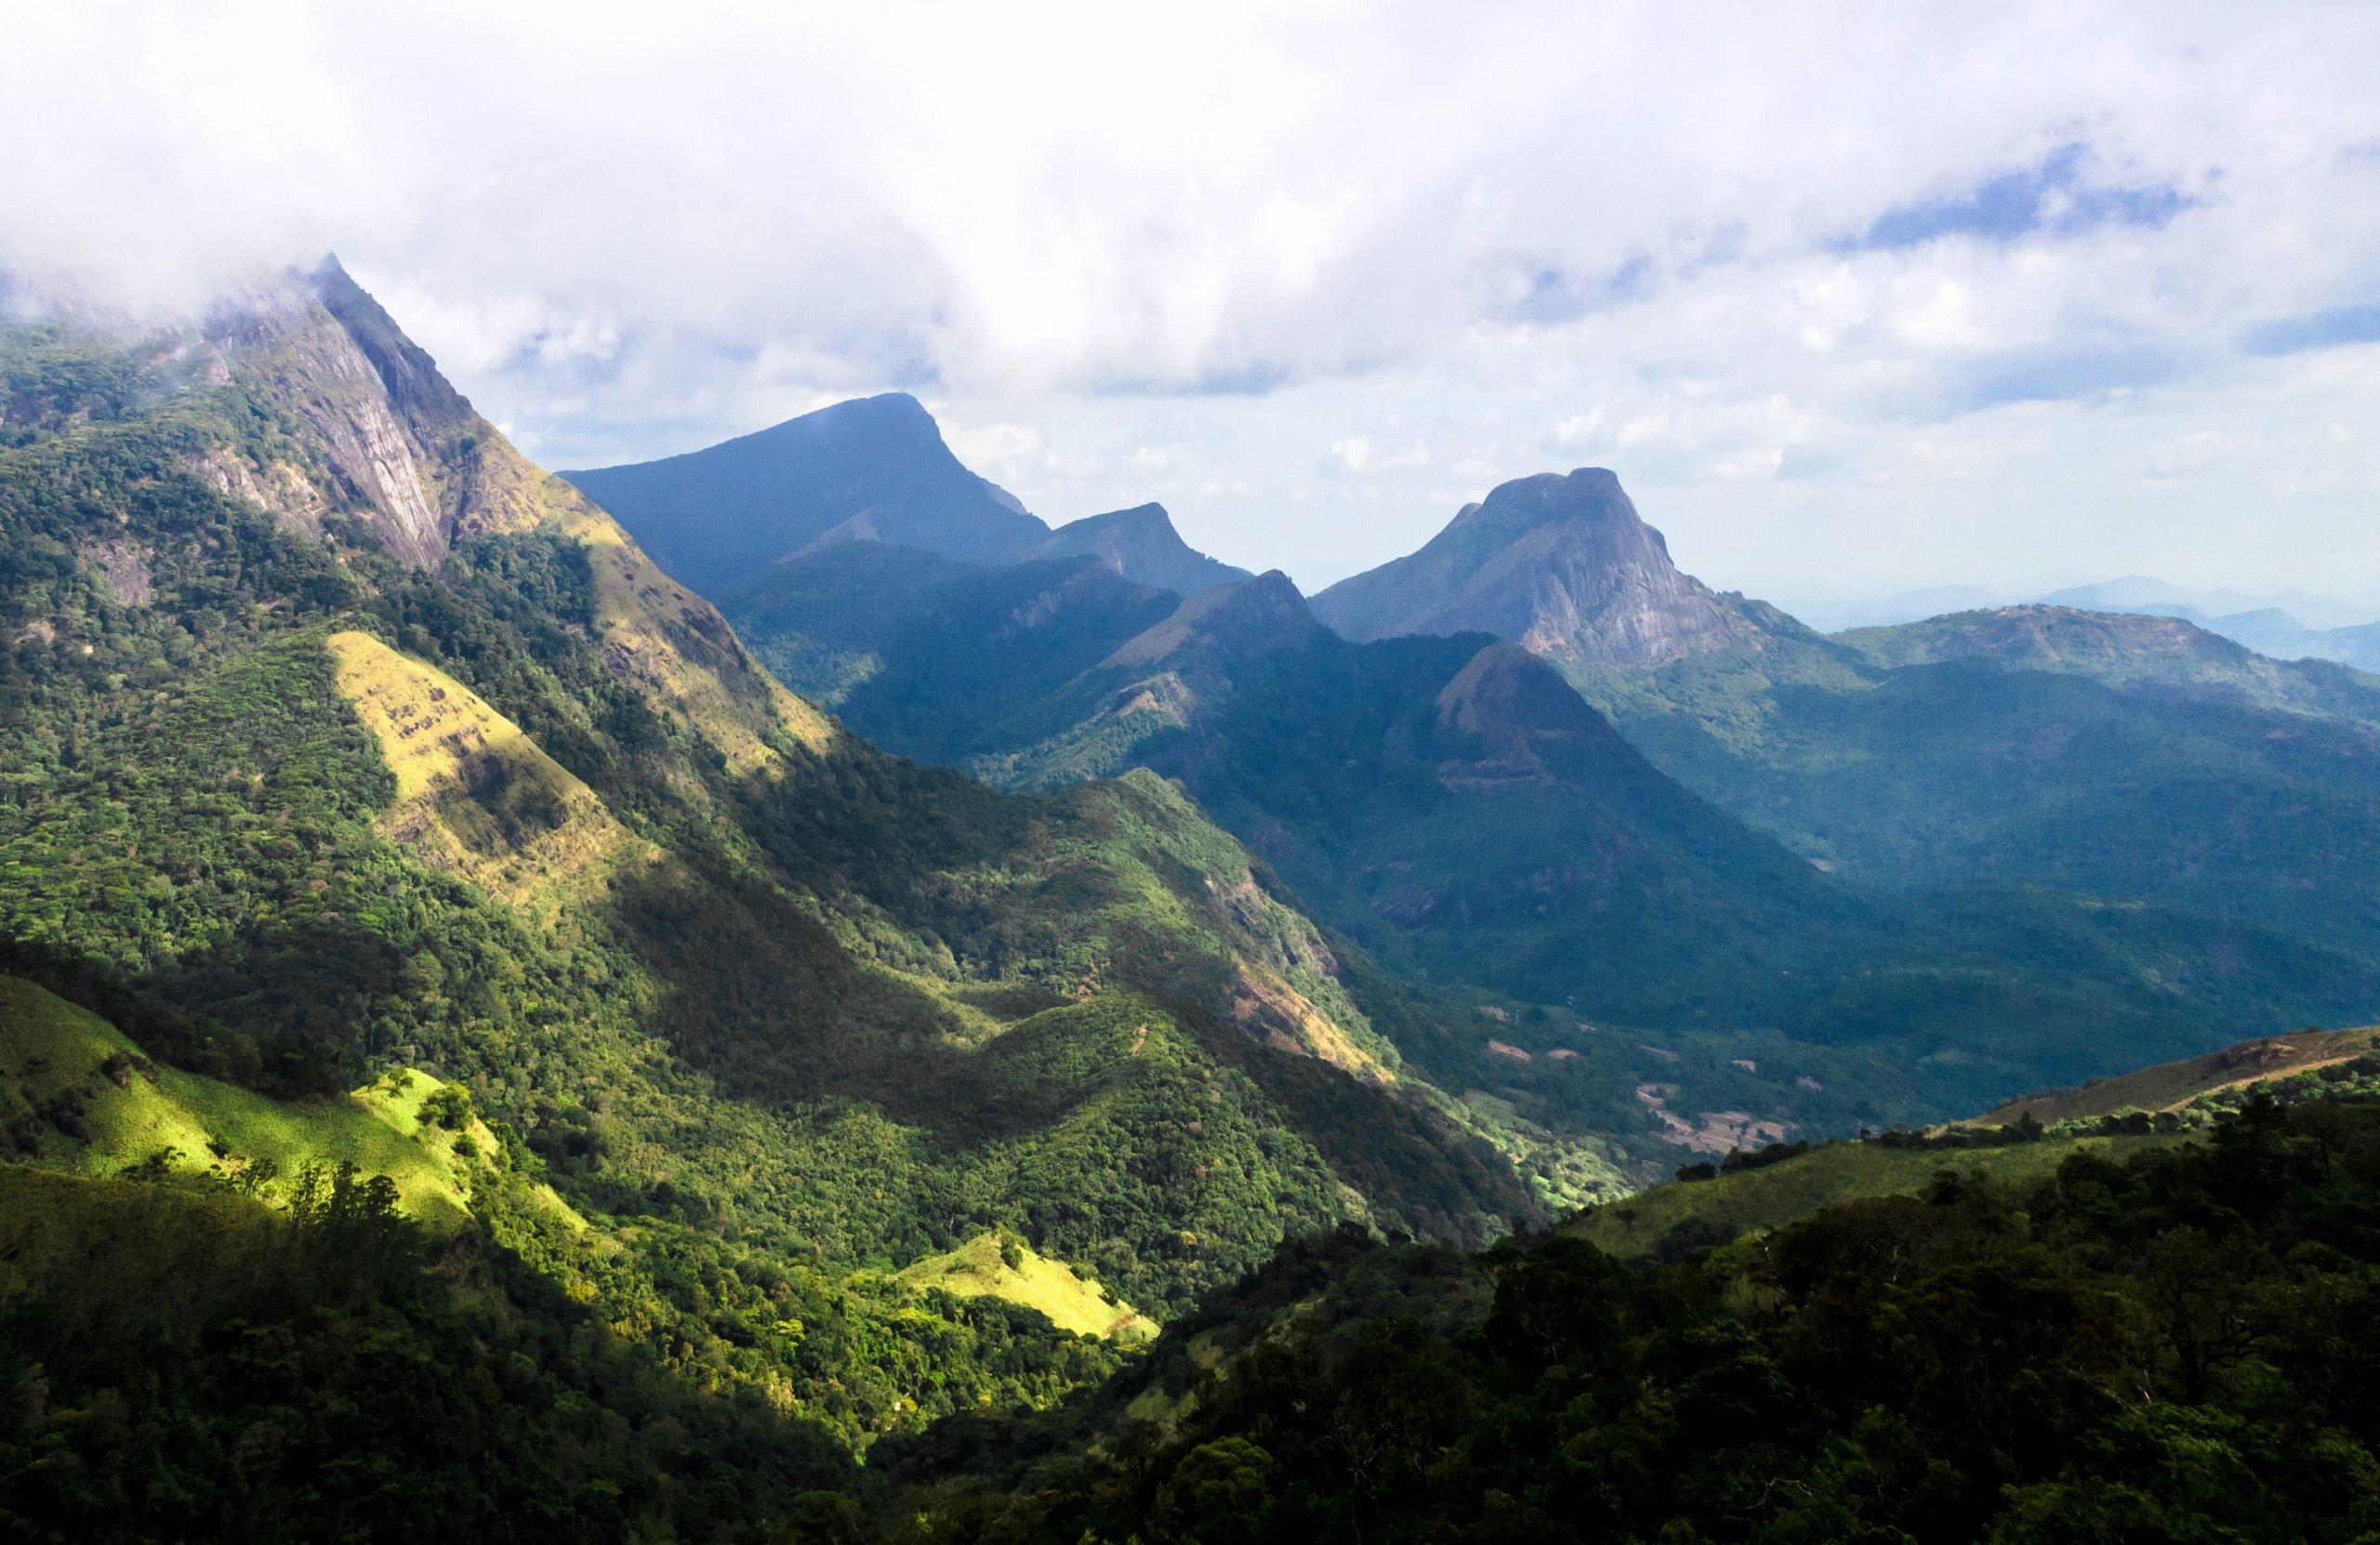 The Knuckles Mountain Range, in Sri Lanka.